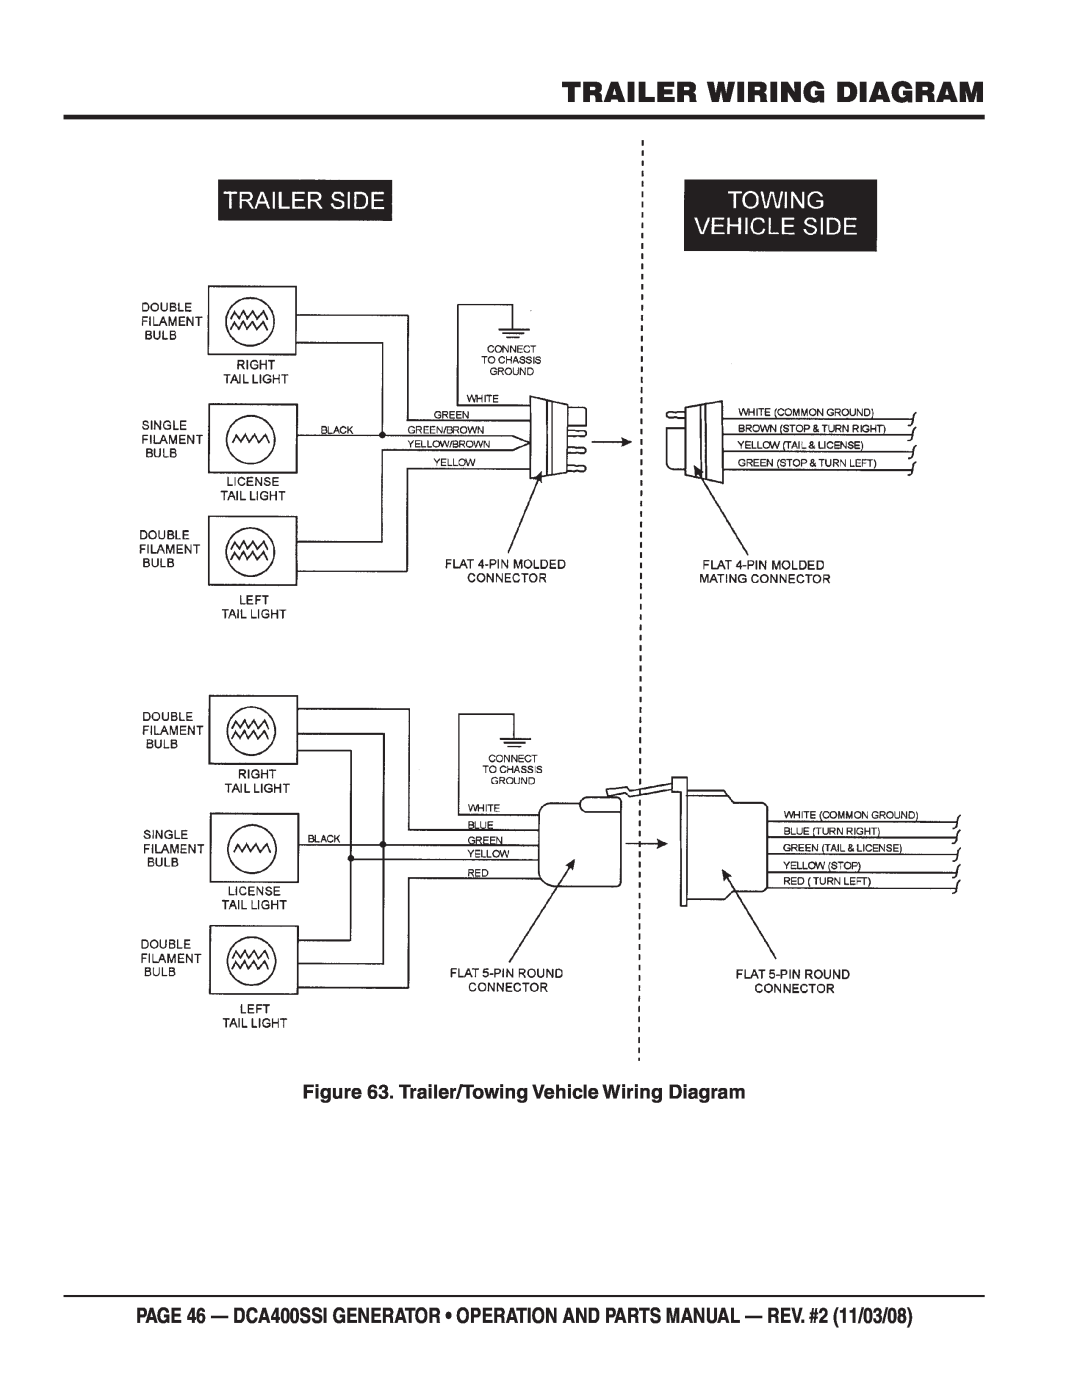 Multiquip DCA400SSI manual Trailer Wiring Diagram, Trailer/Towing Vehicle Wiring Diagram 